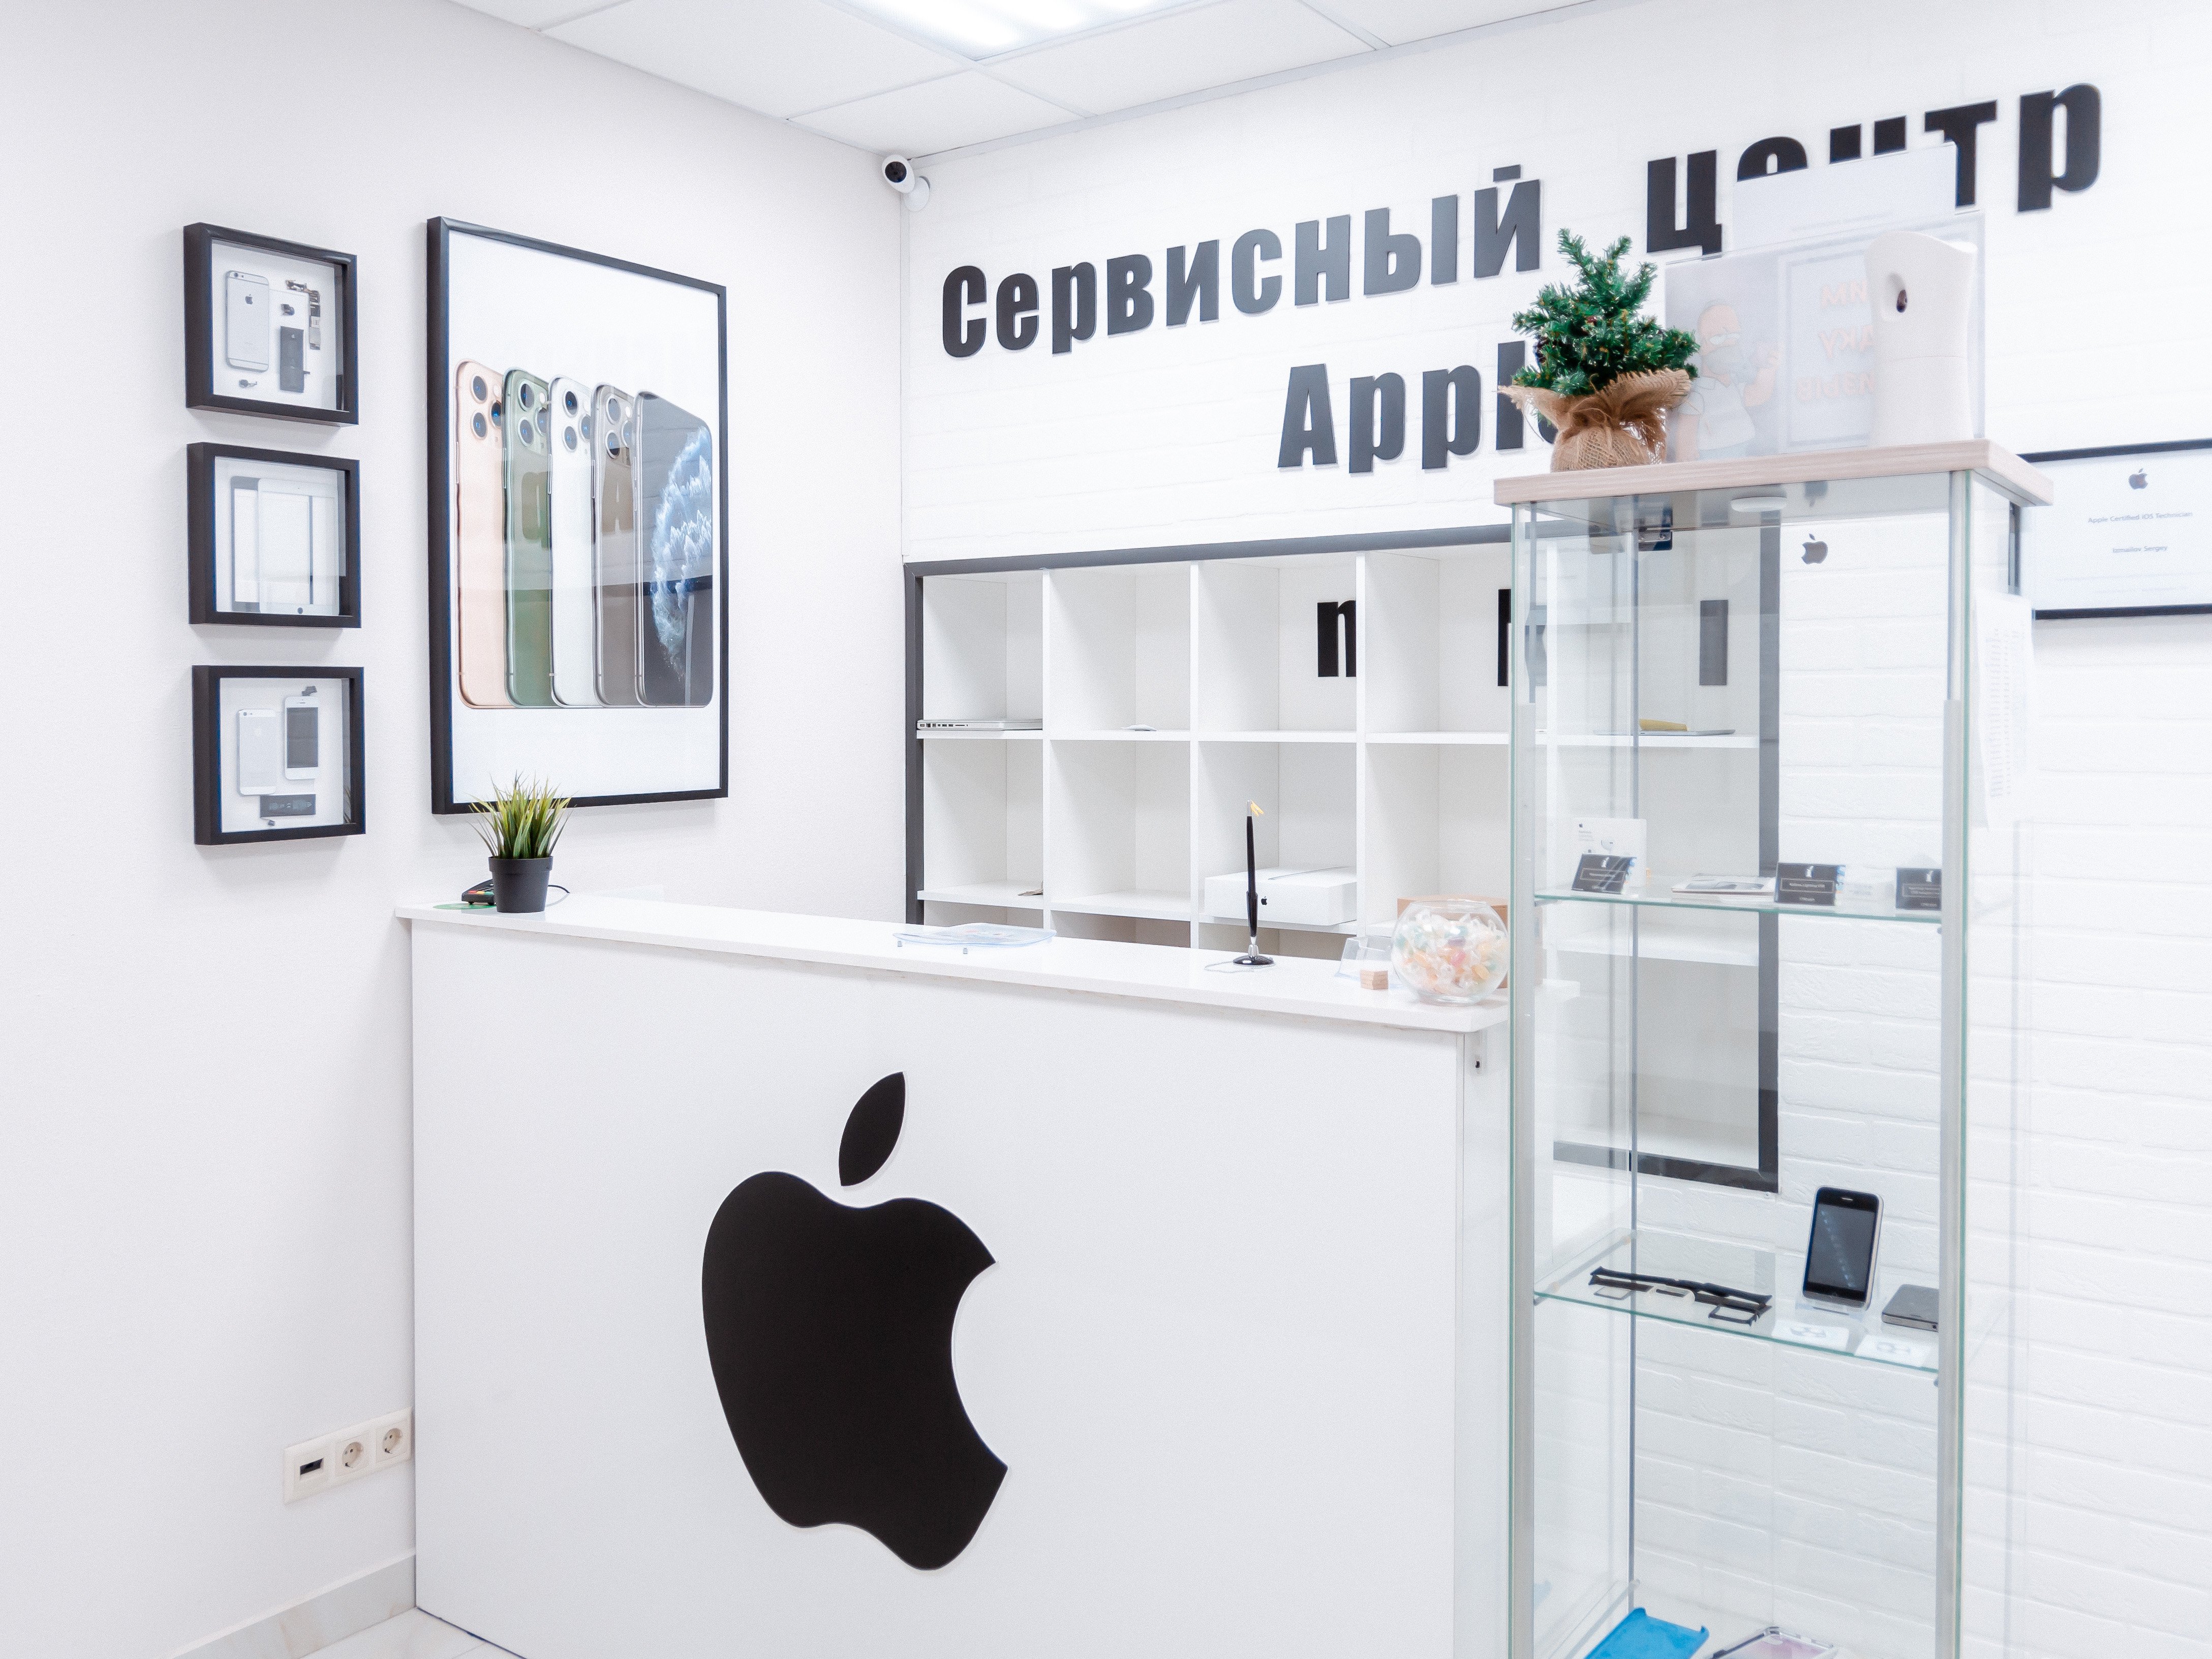 Сервисный центр macbook. Сервисный центр Apple. Сервисный центр эпл. Сервис центр эпл. Сервисный центр Apple в Москве.